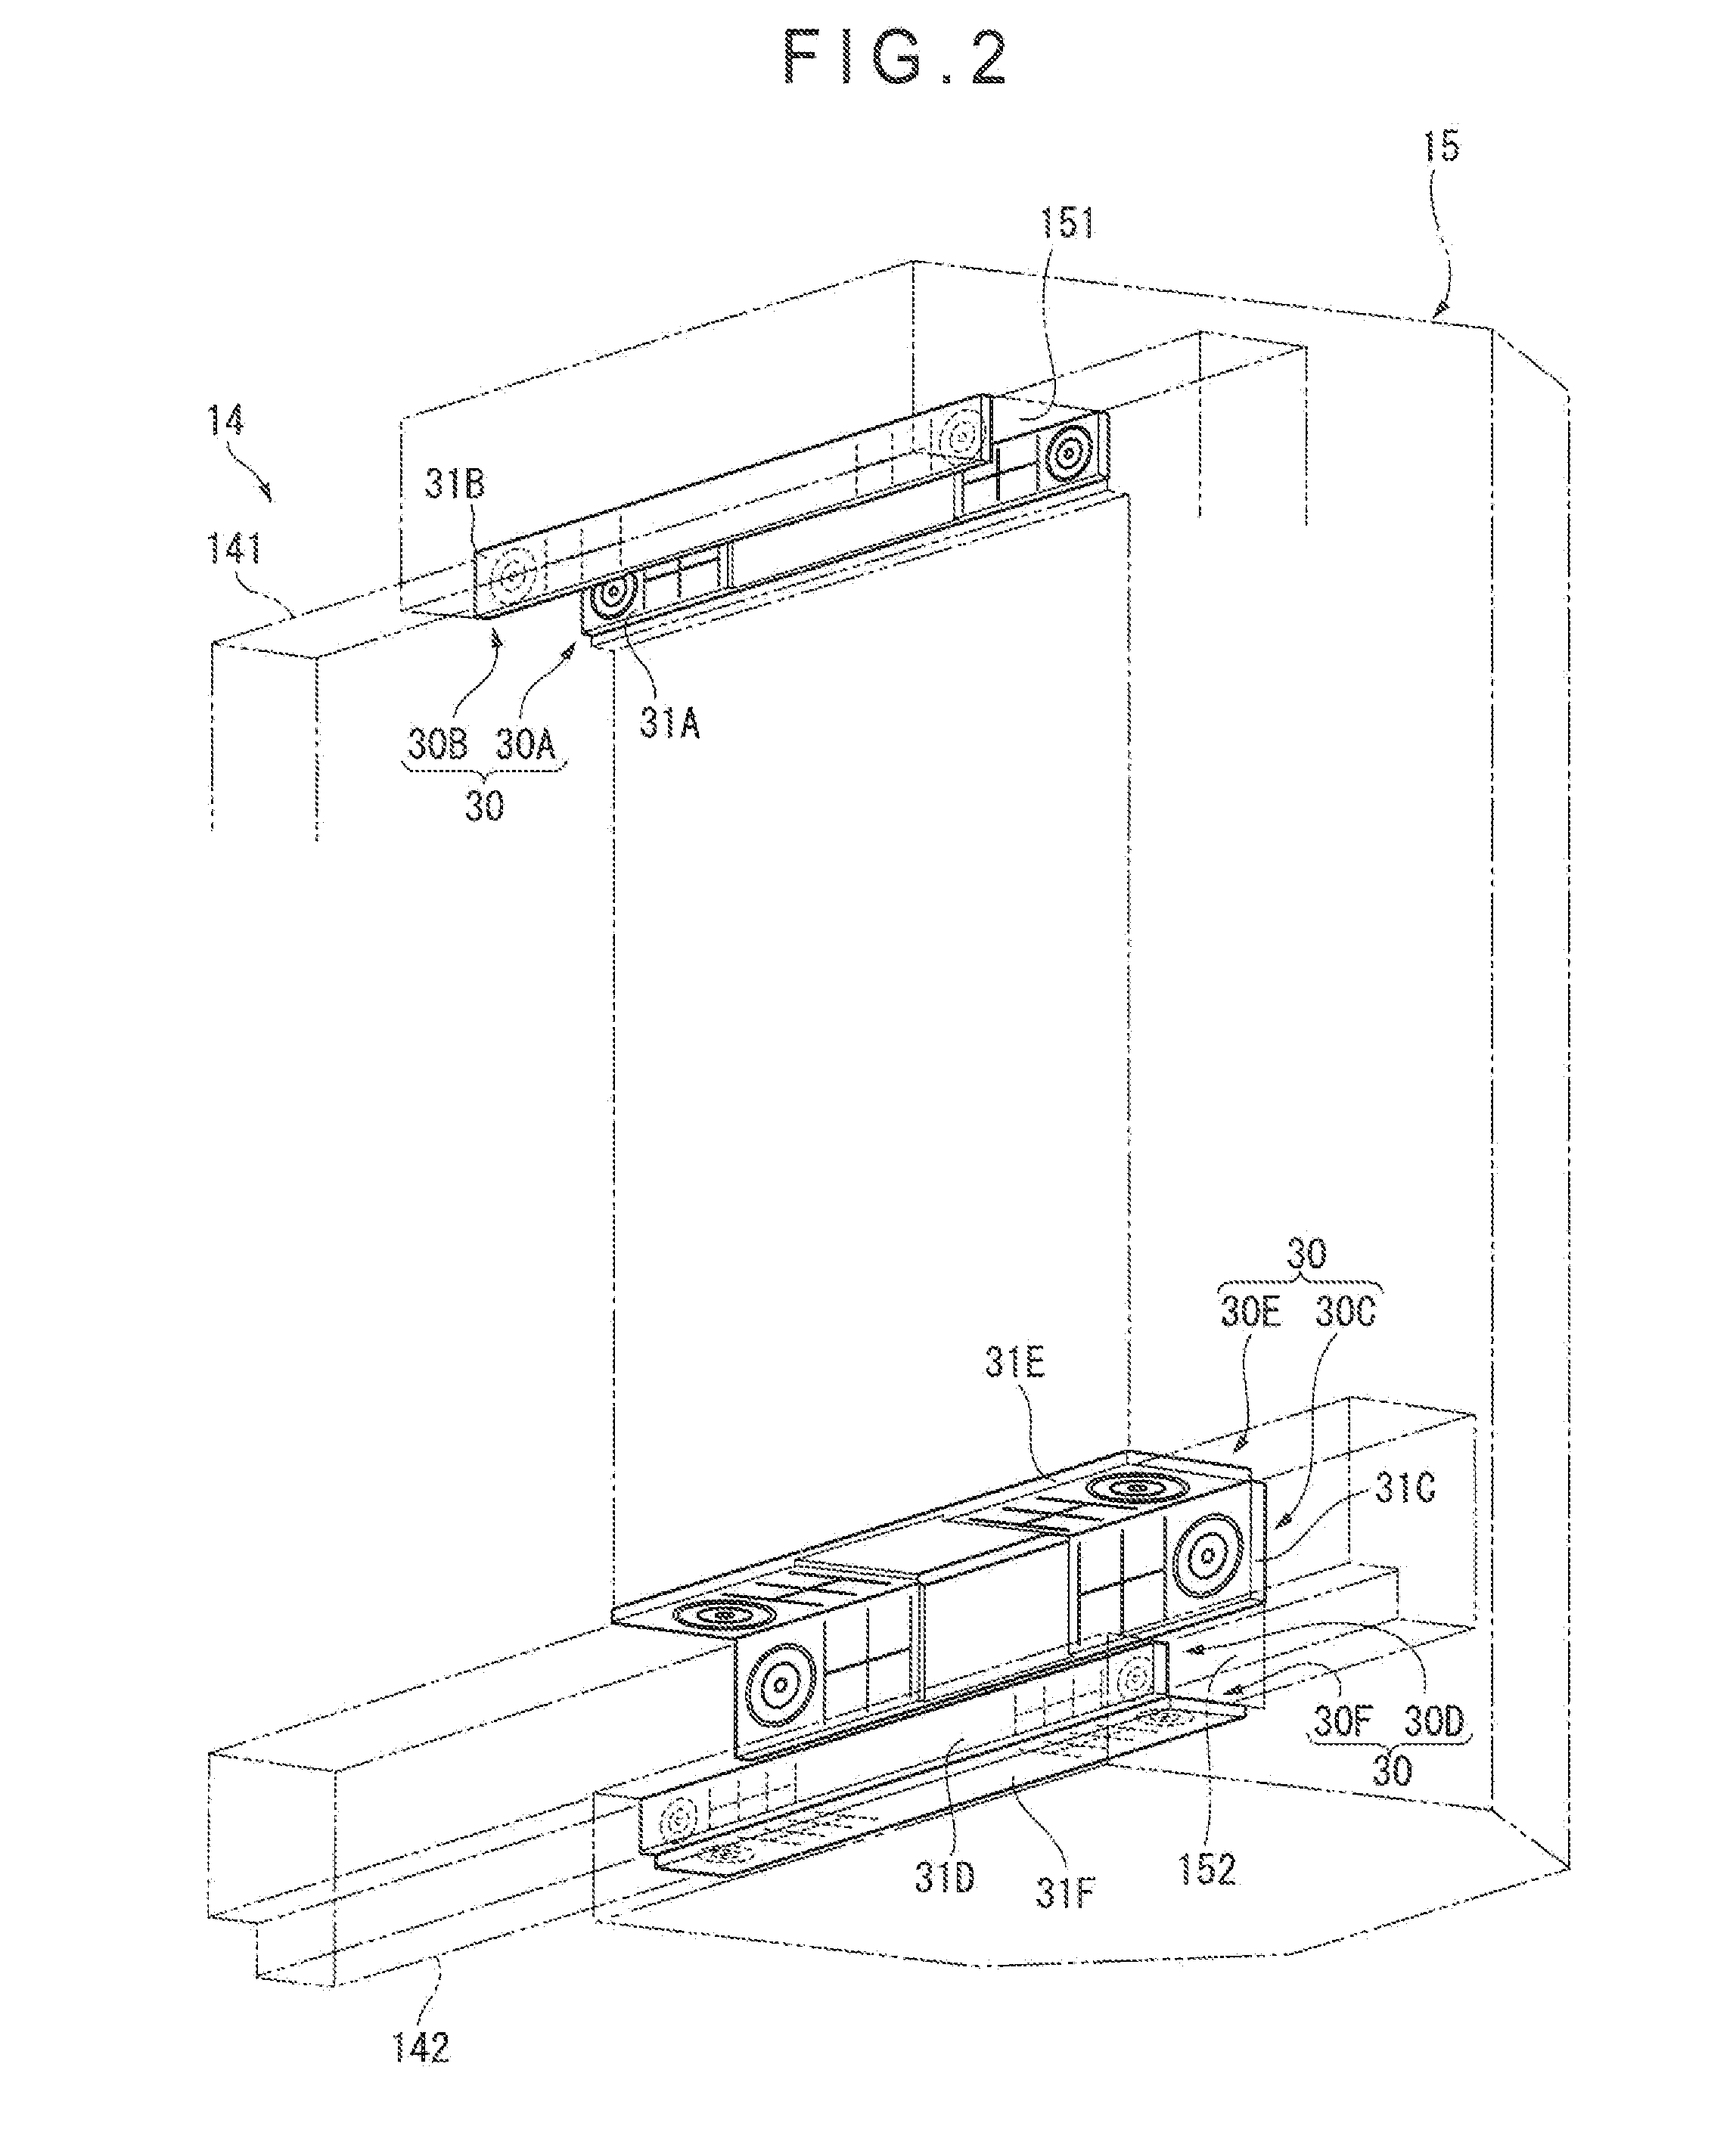 Guide mechanism of machine tool and machine tool